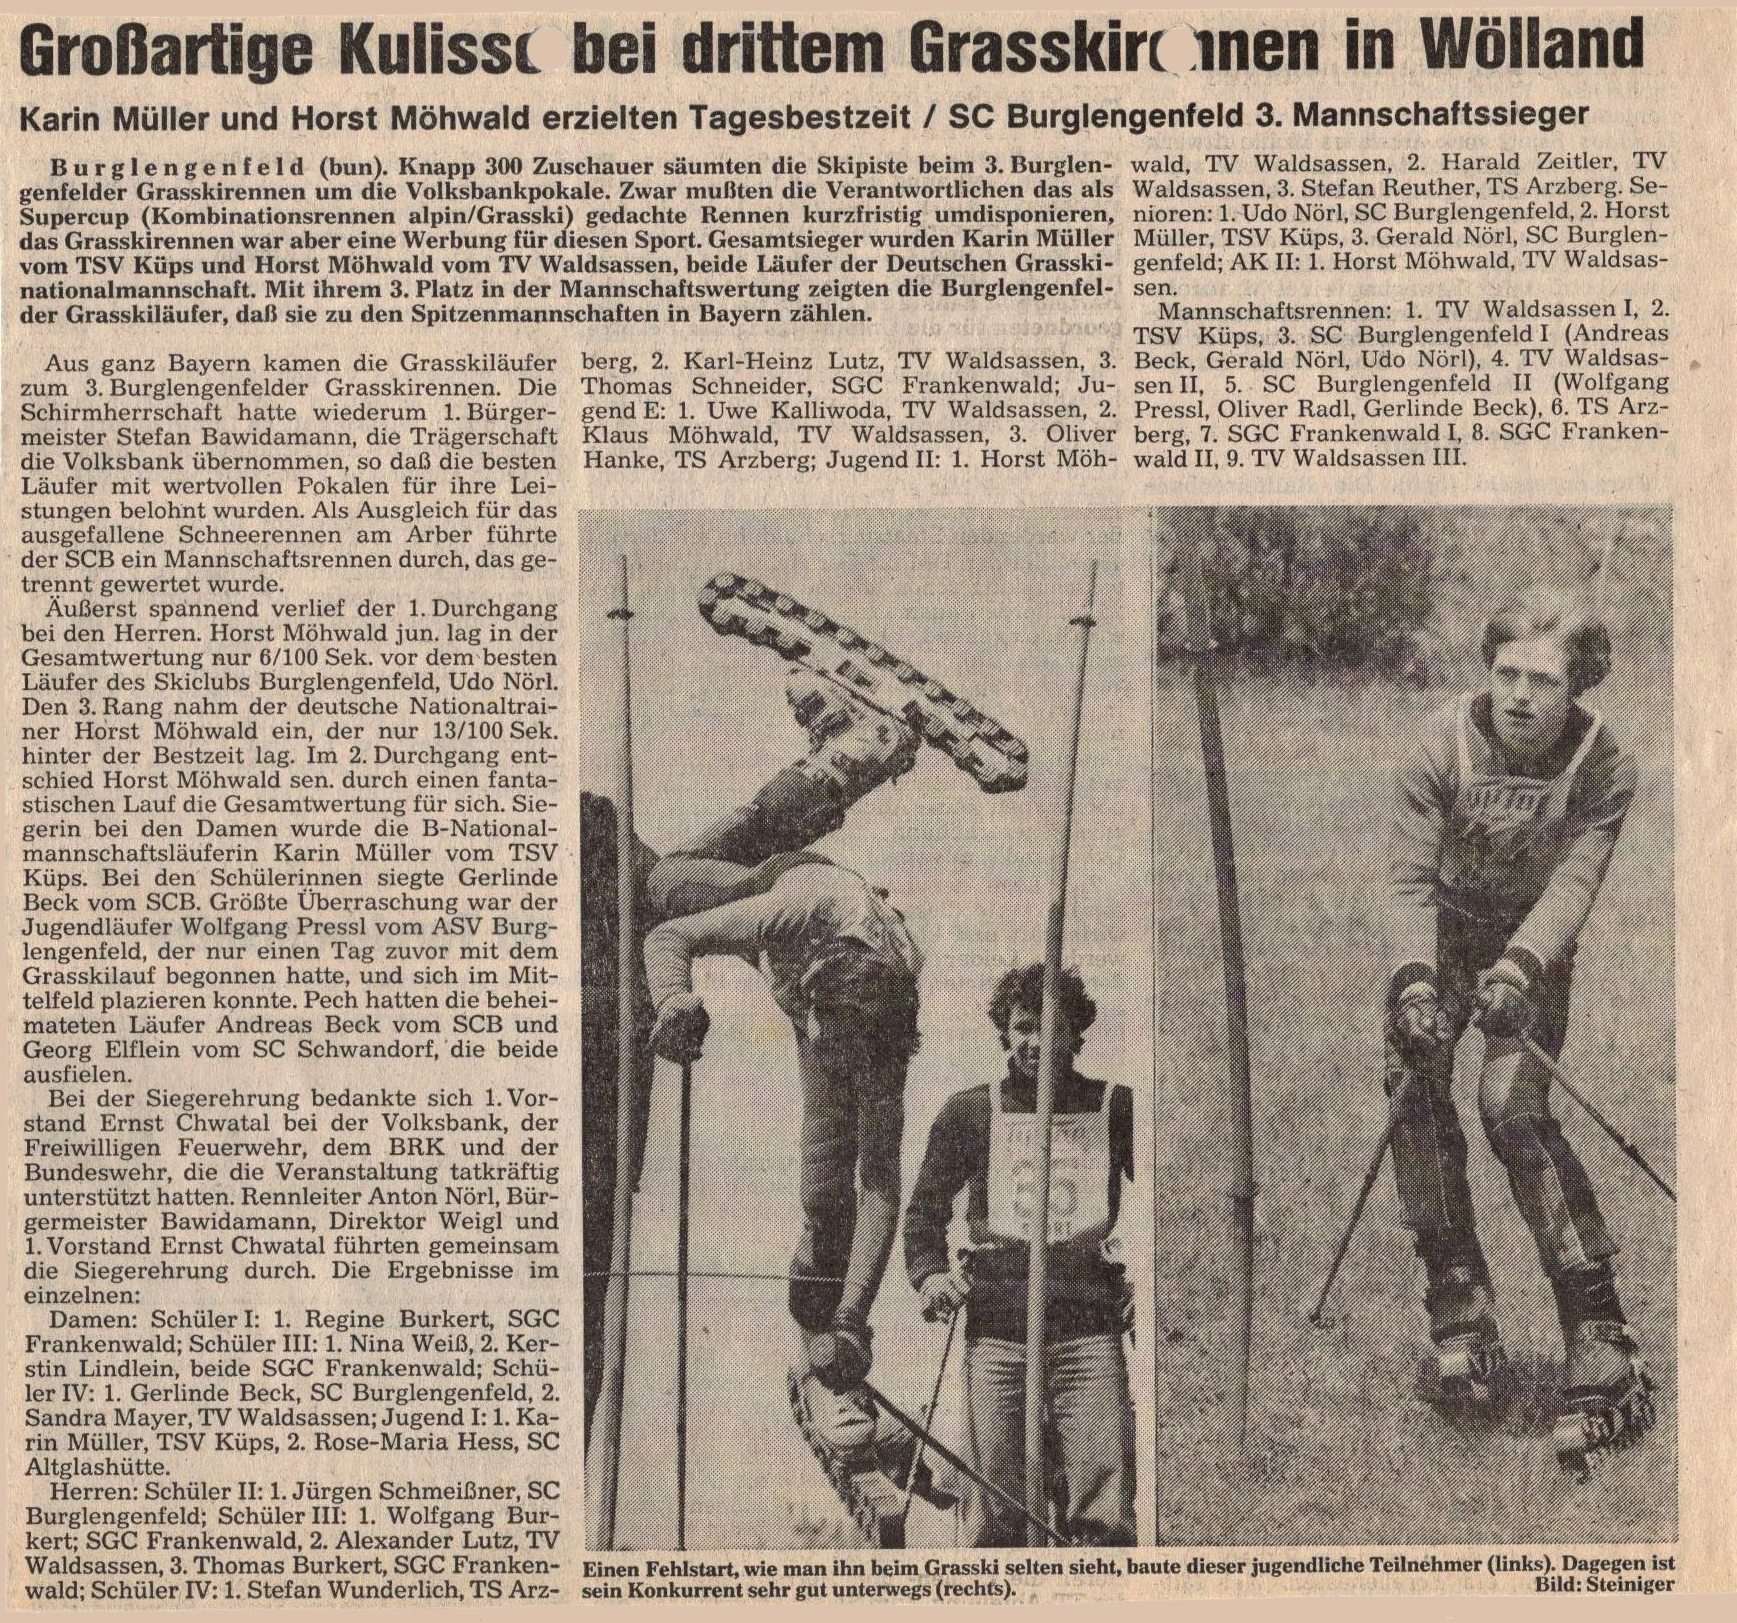 Ski-Club Burglengenfeld - Erfolge beim Grasskilauf